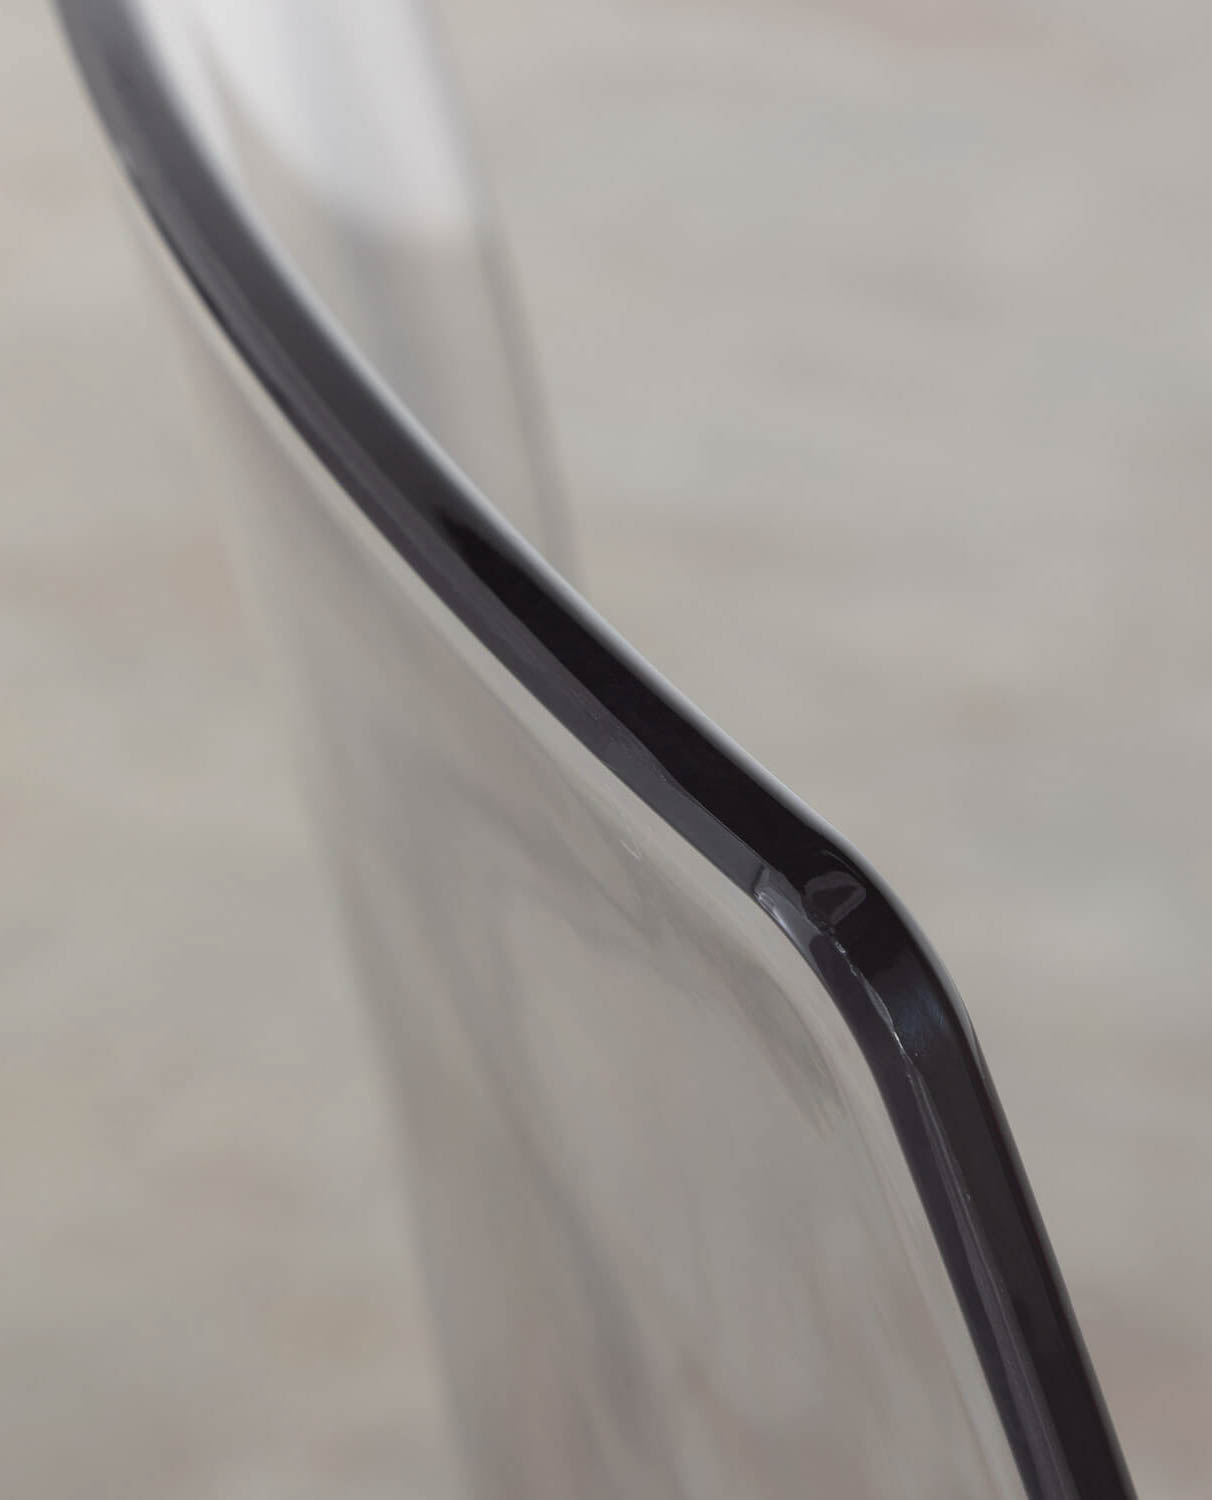  Pvillez Sillas de comedor modernas de plástico transparente con  patas de metal resistentes al óxido, sillas de cocina de acrílico con  respaldo de concha, sillas laterales modernas para cocina, comedor, sala